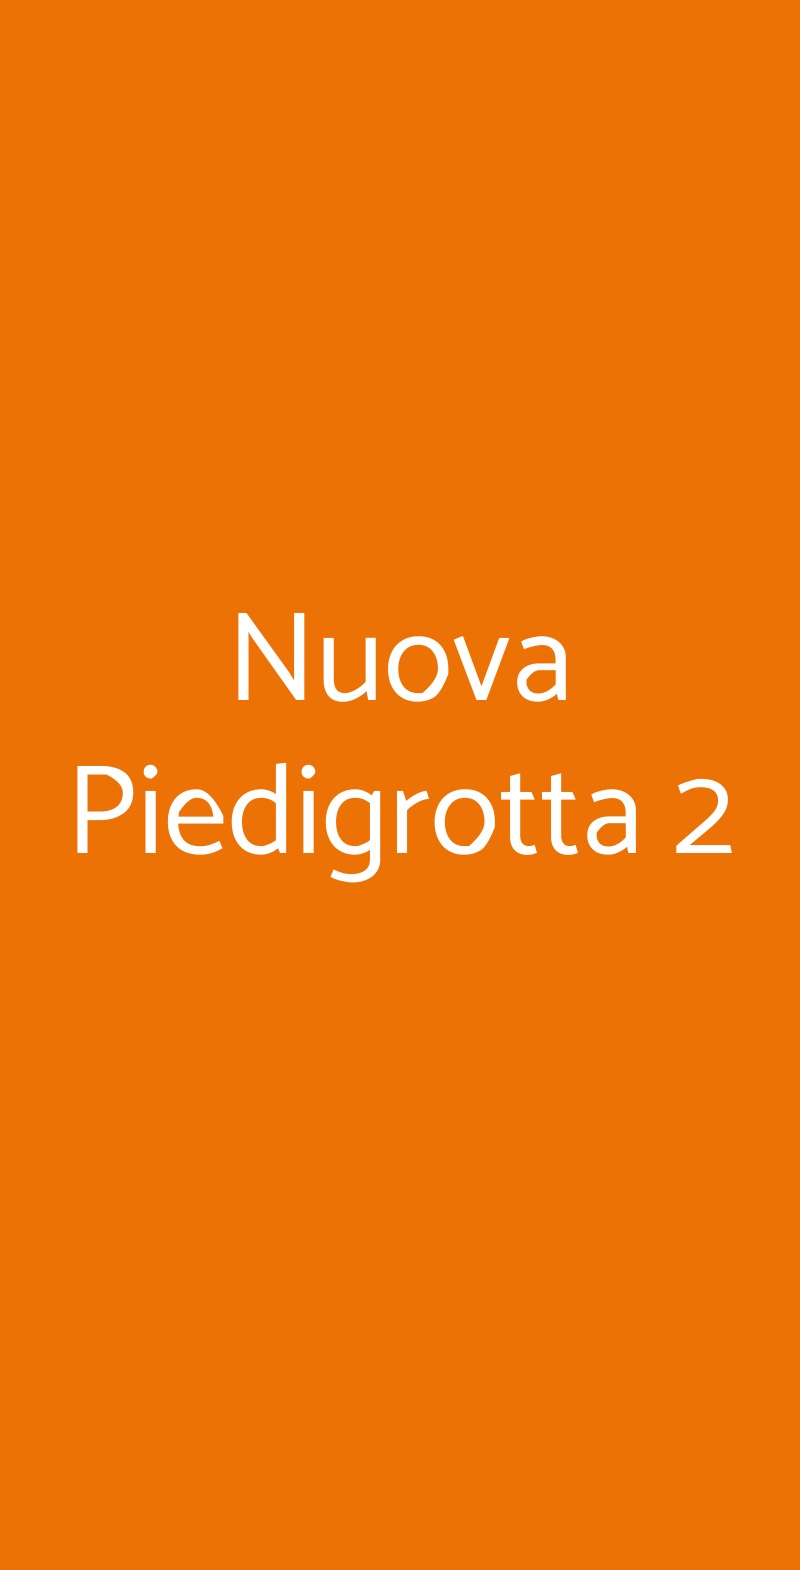 Nuova Piedigrotta 2 Reggio Emilia menù 1 pagina